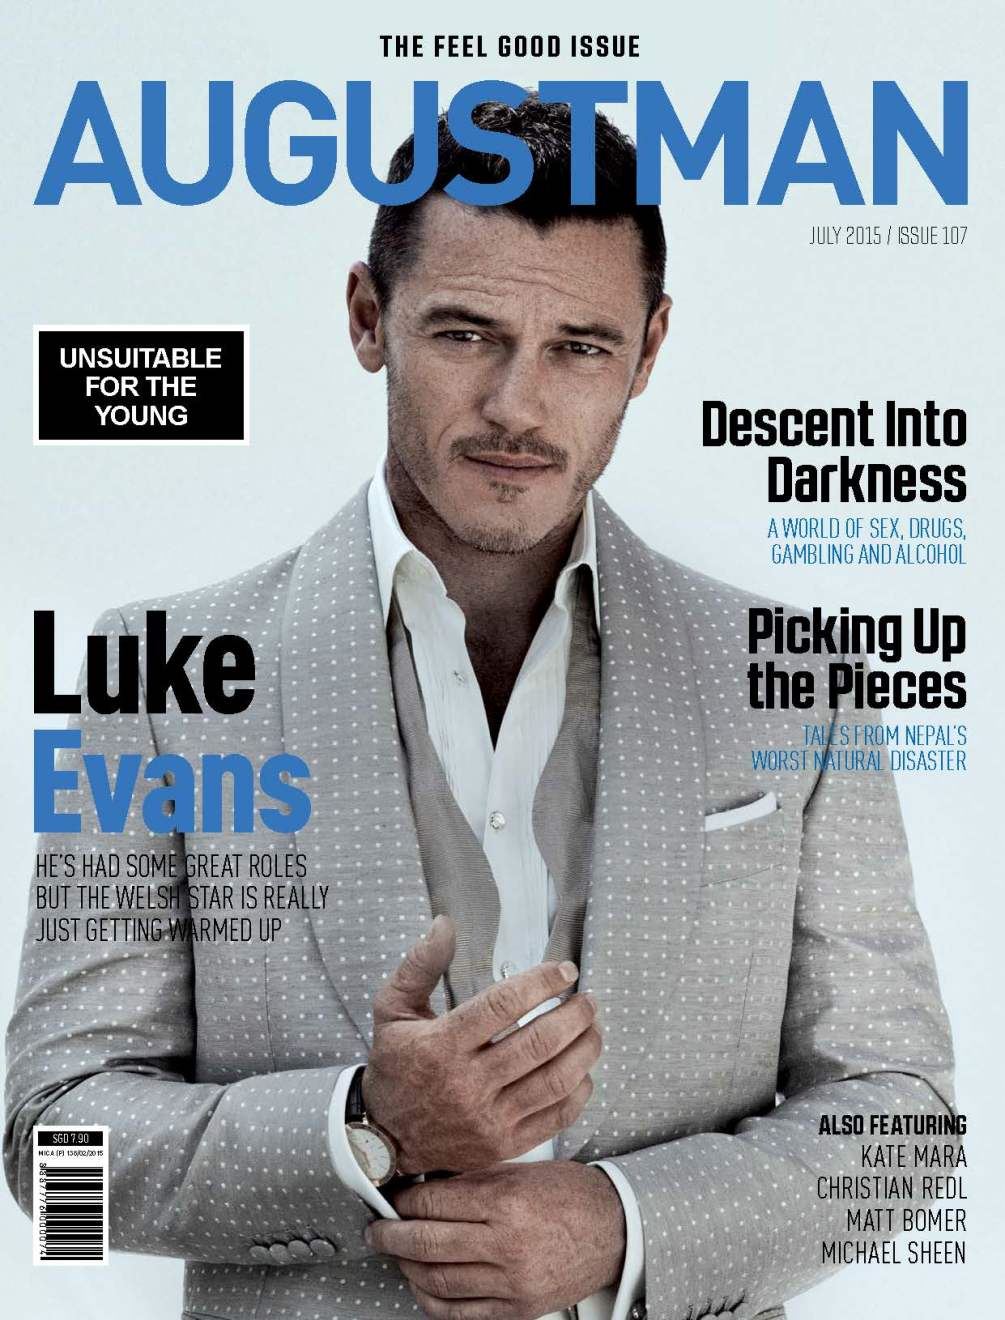 Luke Evans Graces July 2015 August Man Cover